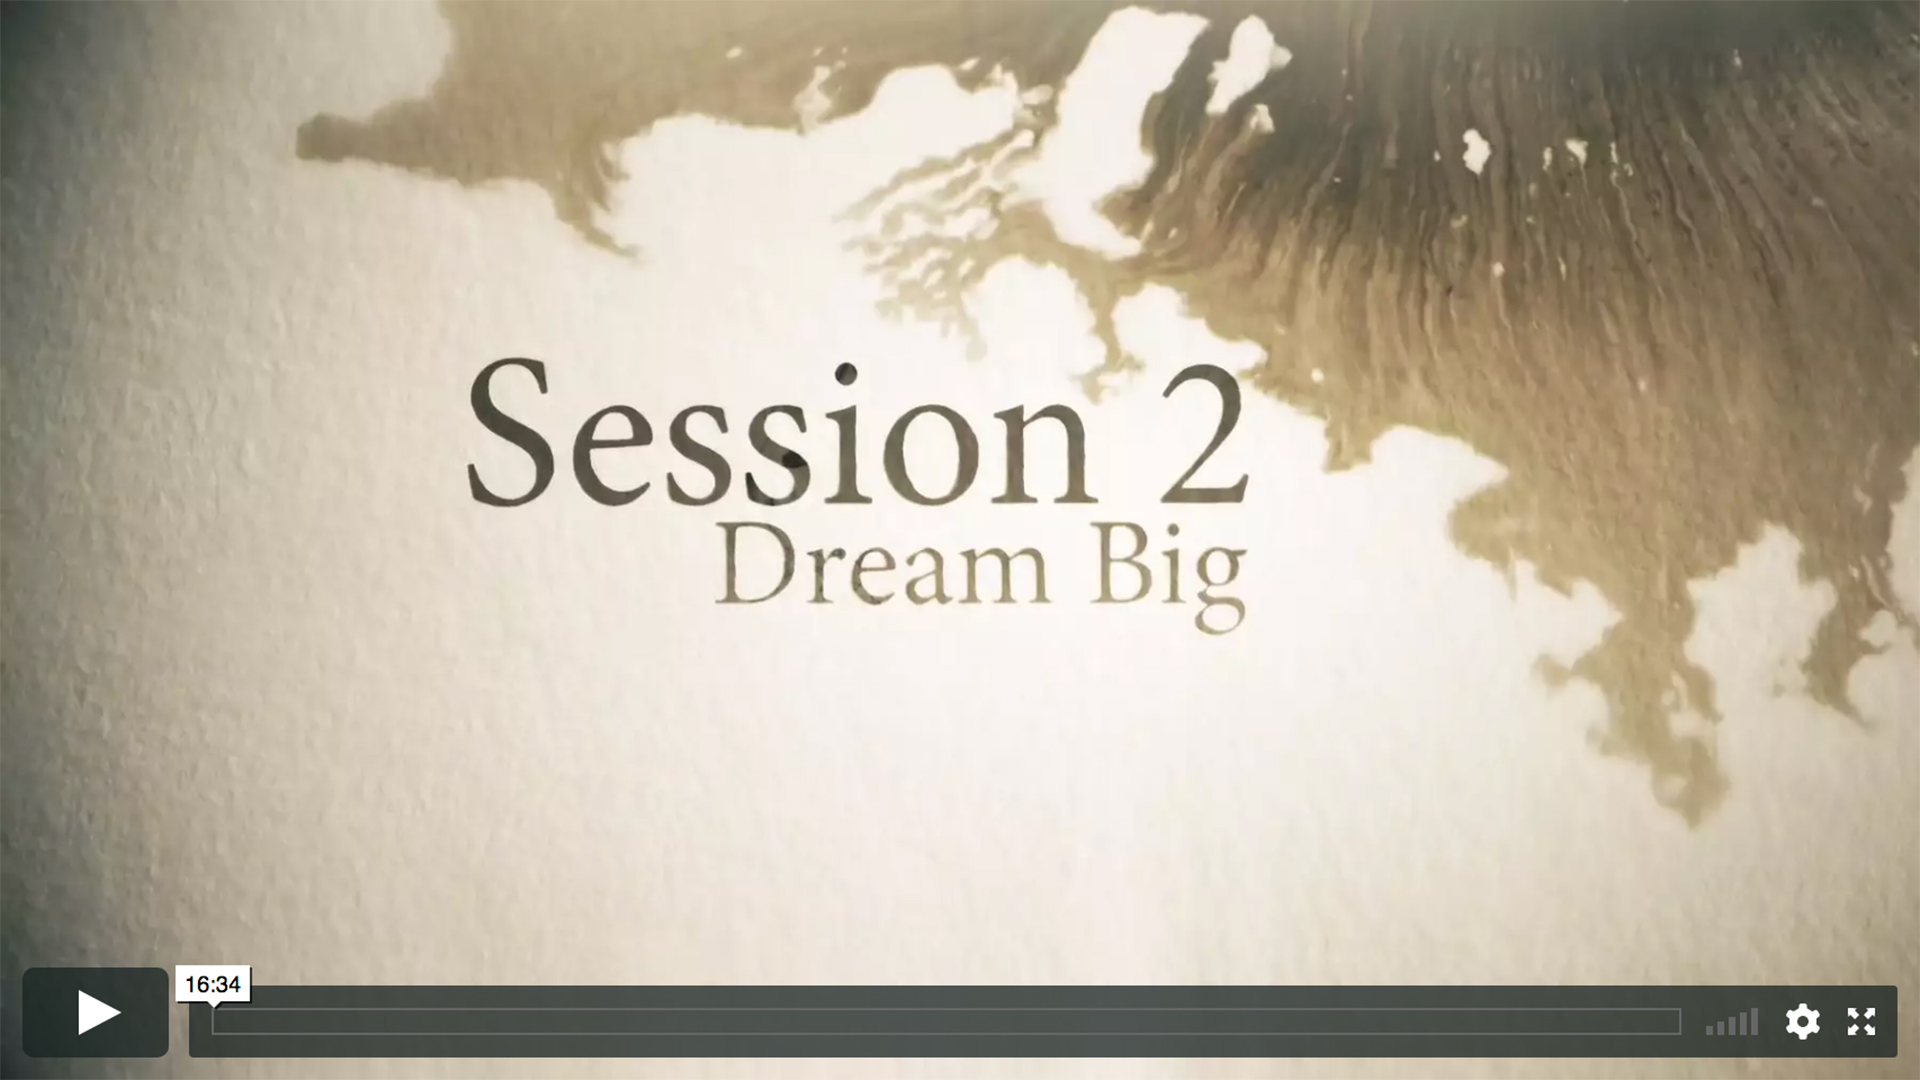 Session 2 - Dream Big